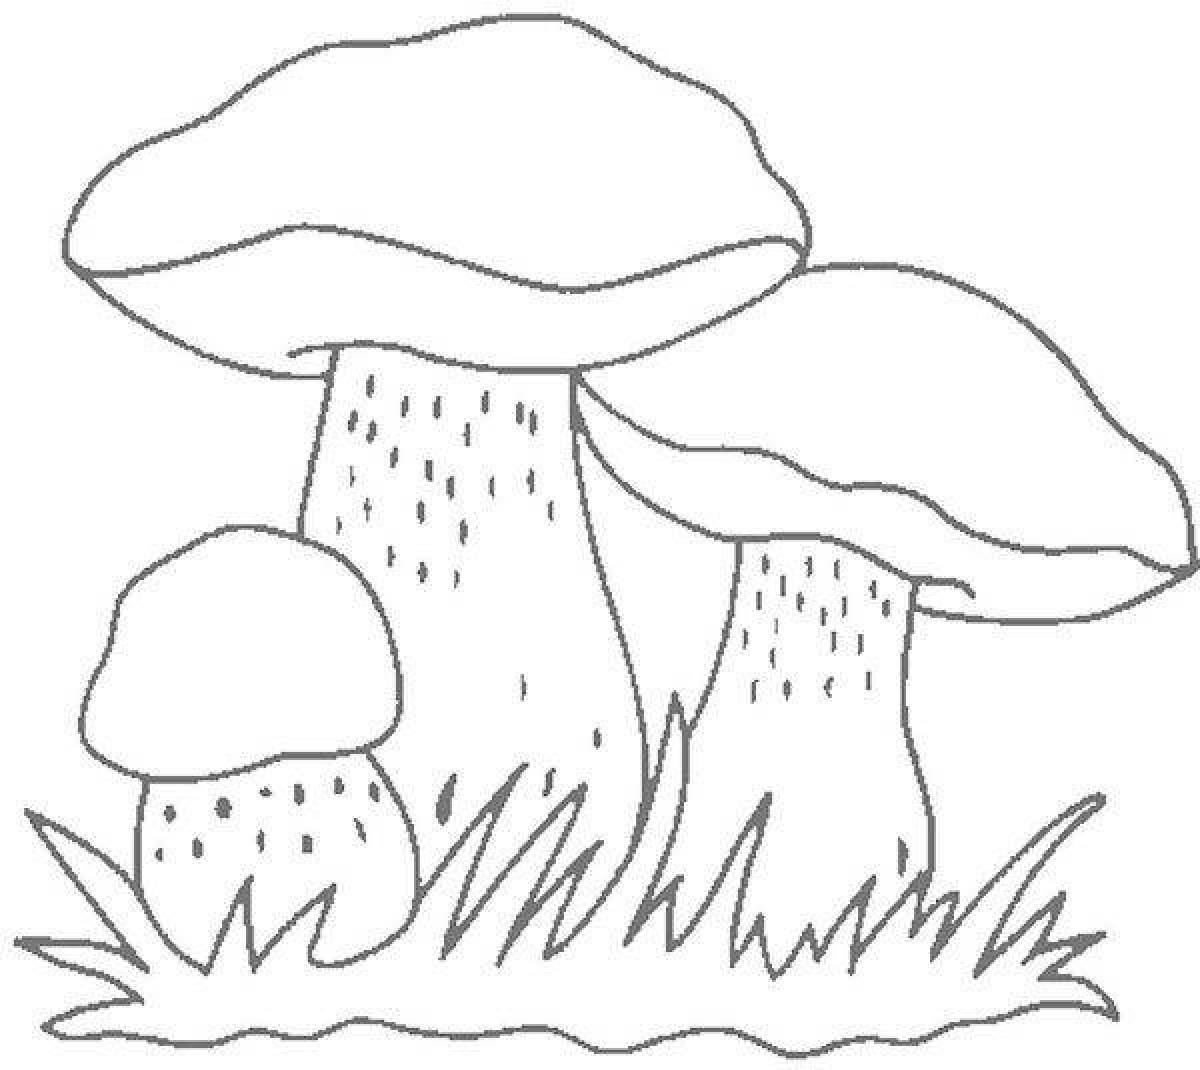 Coloring book shining boletus mushroom